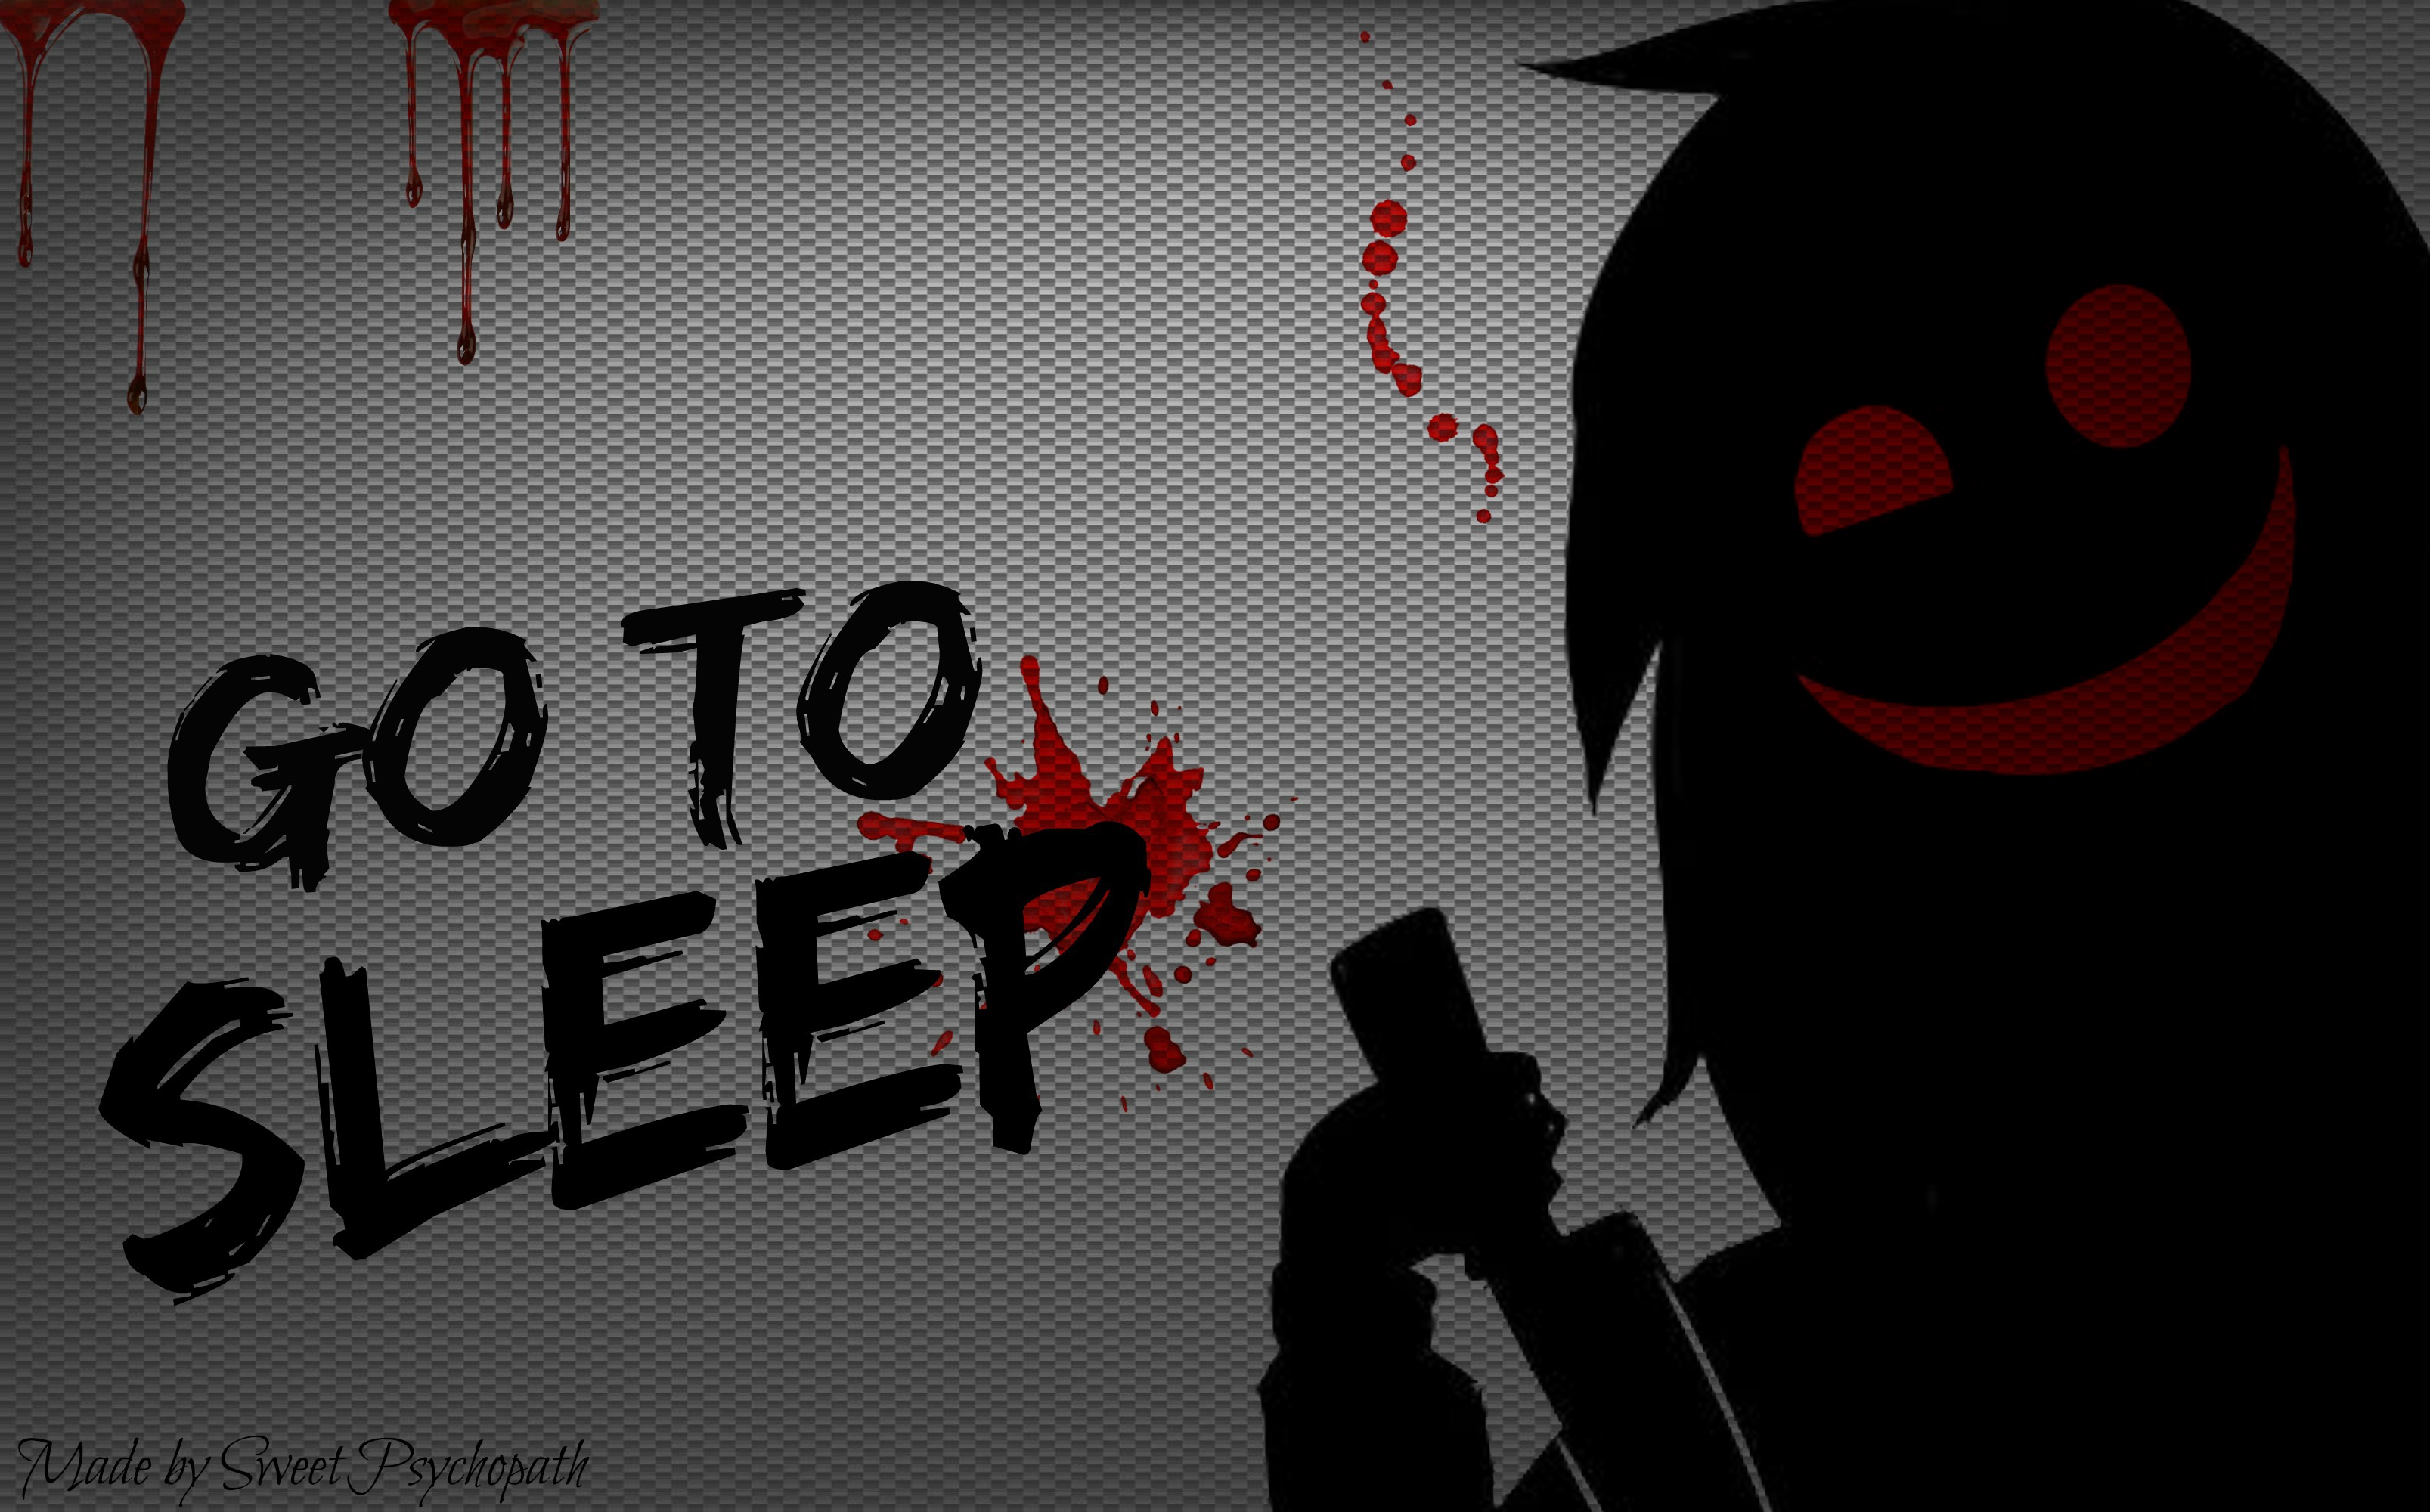 Jeff The Killer Go To Sleep Wallpaper By Sweetpsychopath On